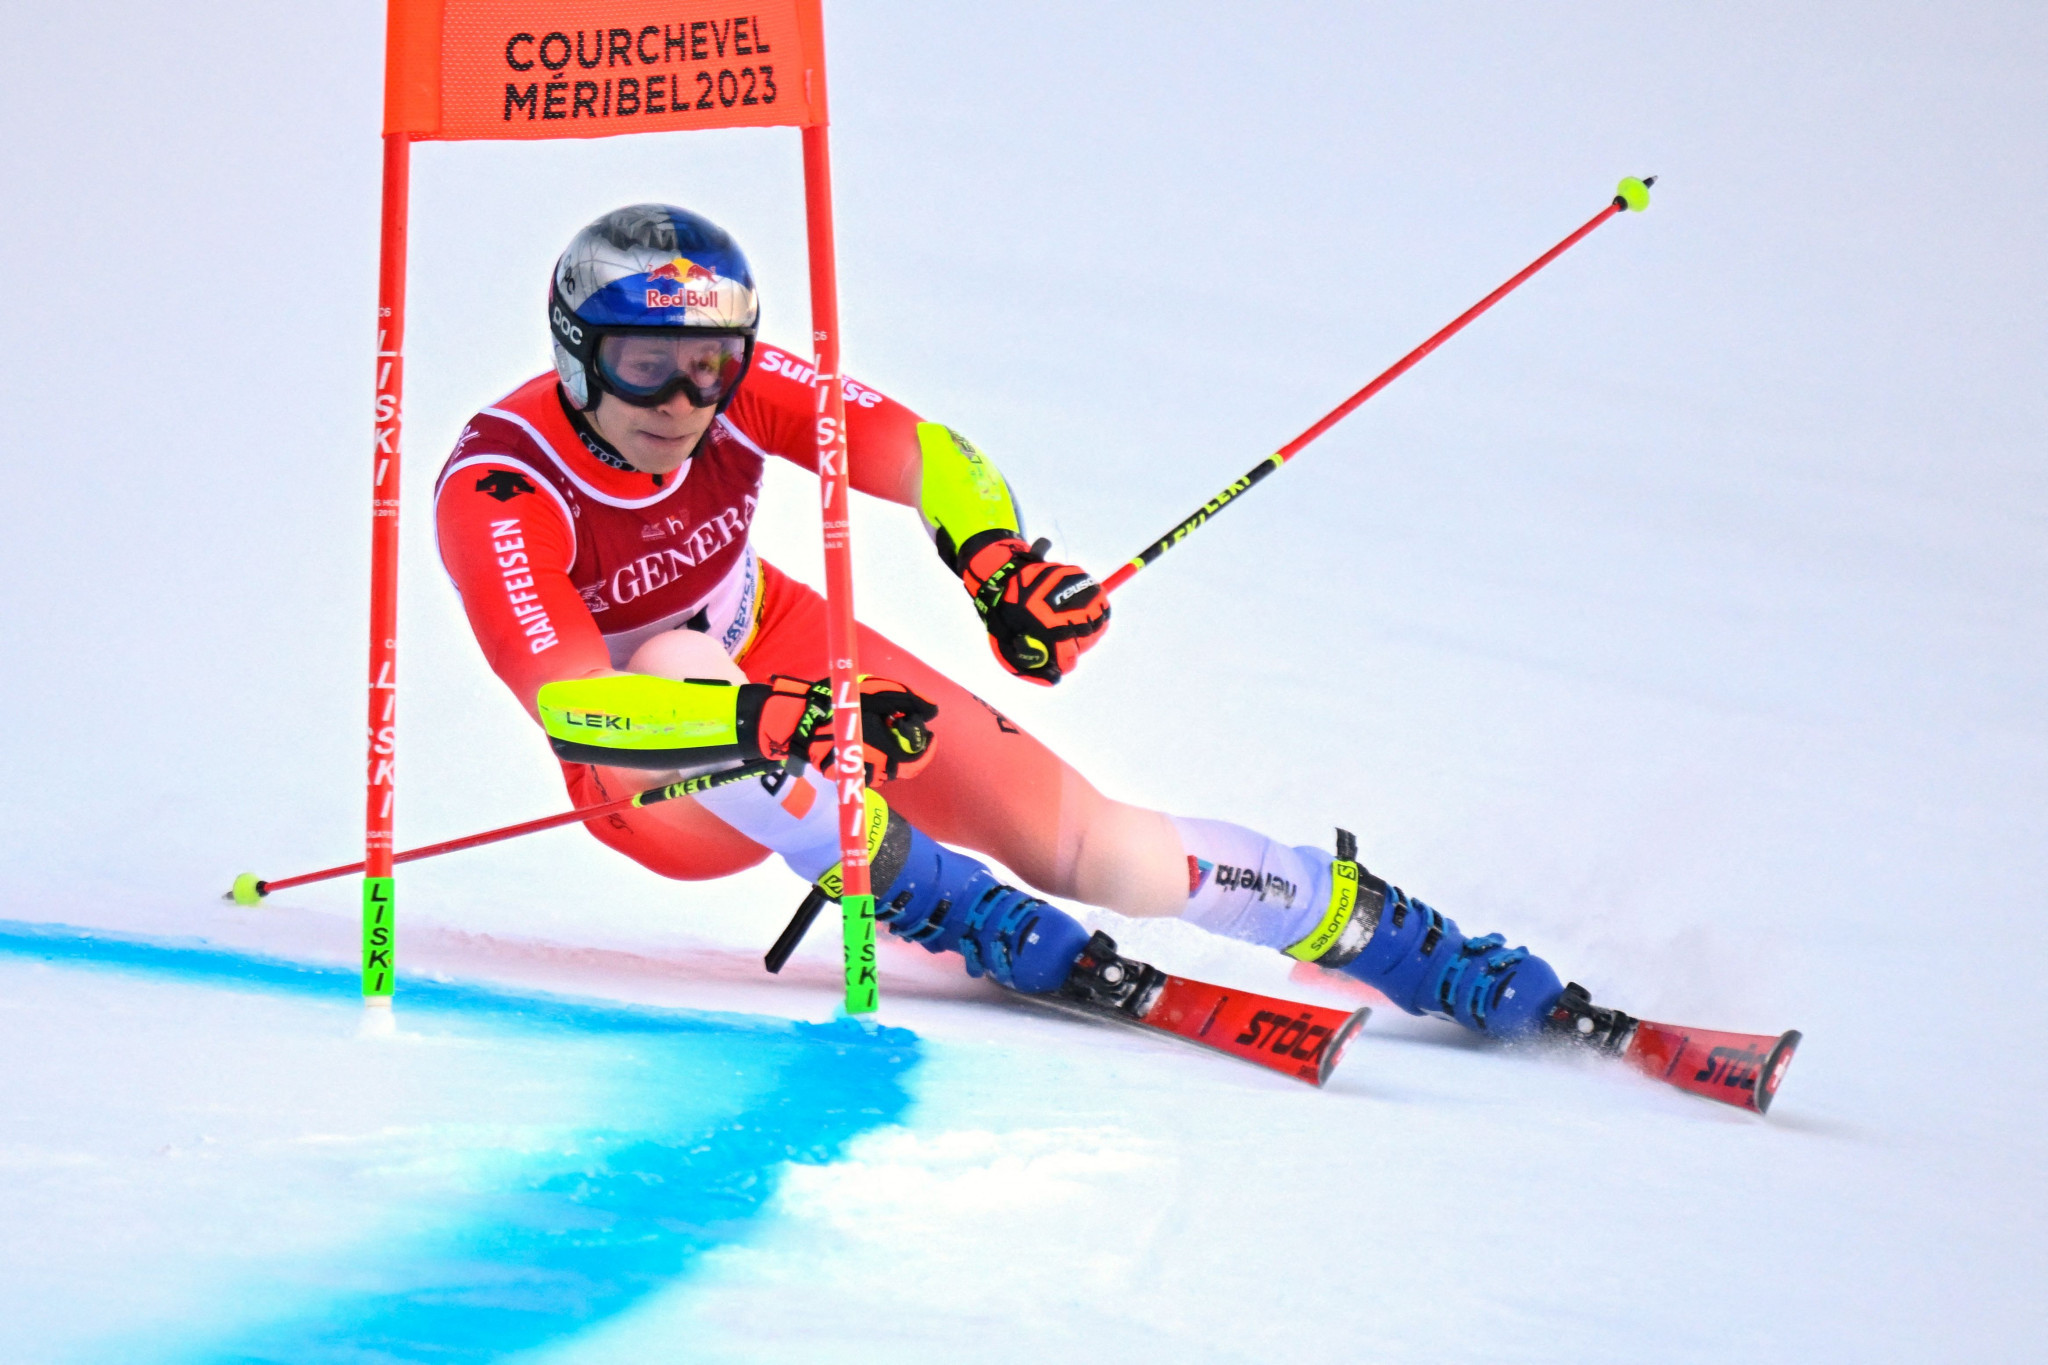 Olympic giant slalom champion Odermatt earns second gold of Alpine World Ski Championships